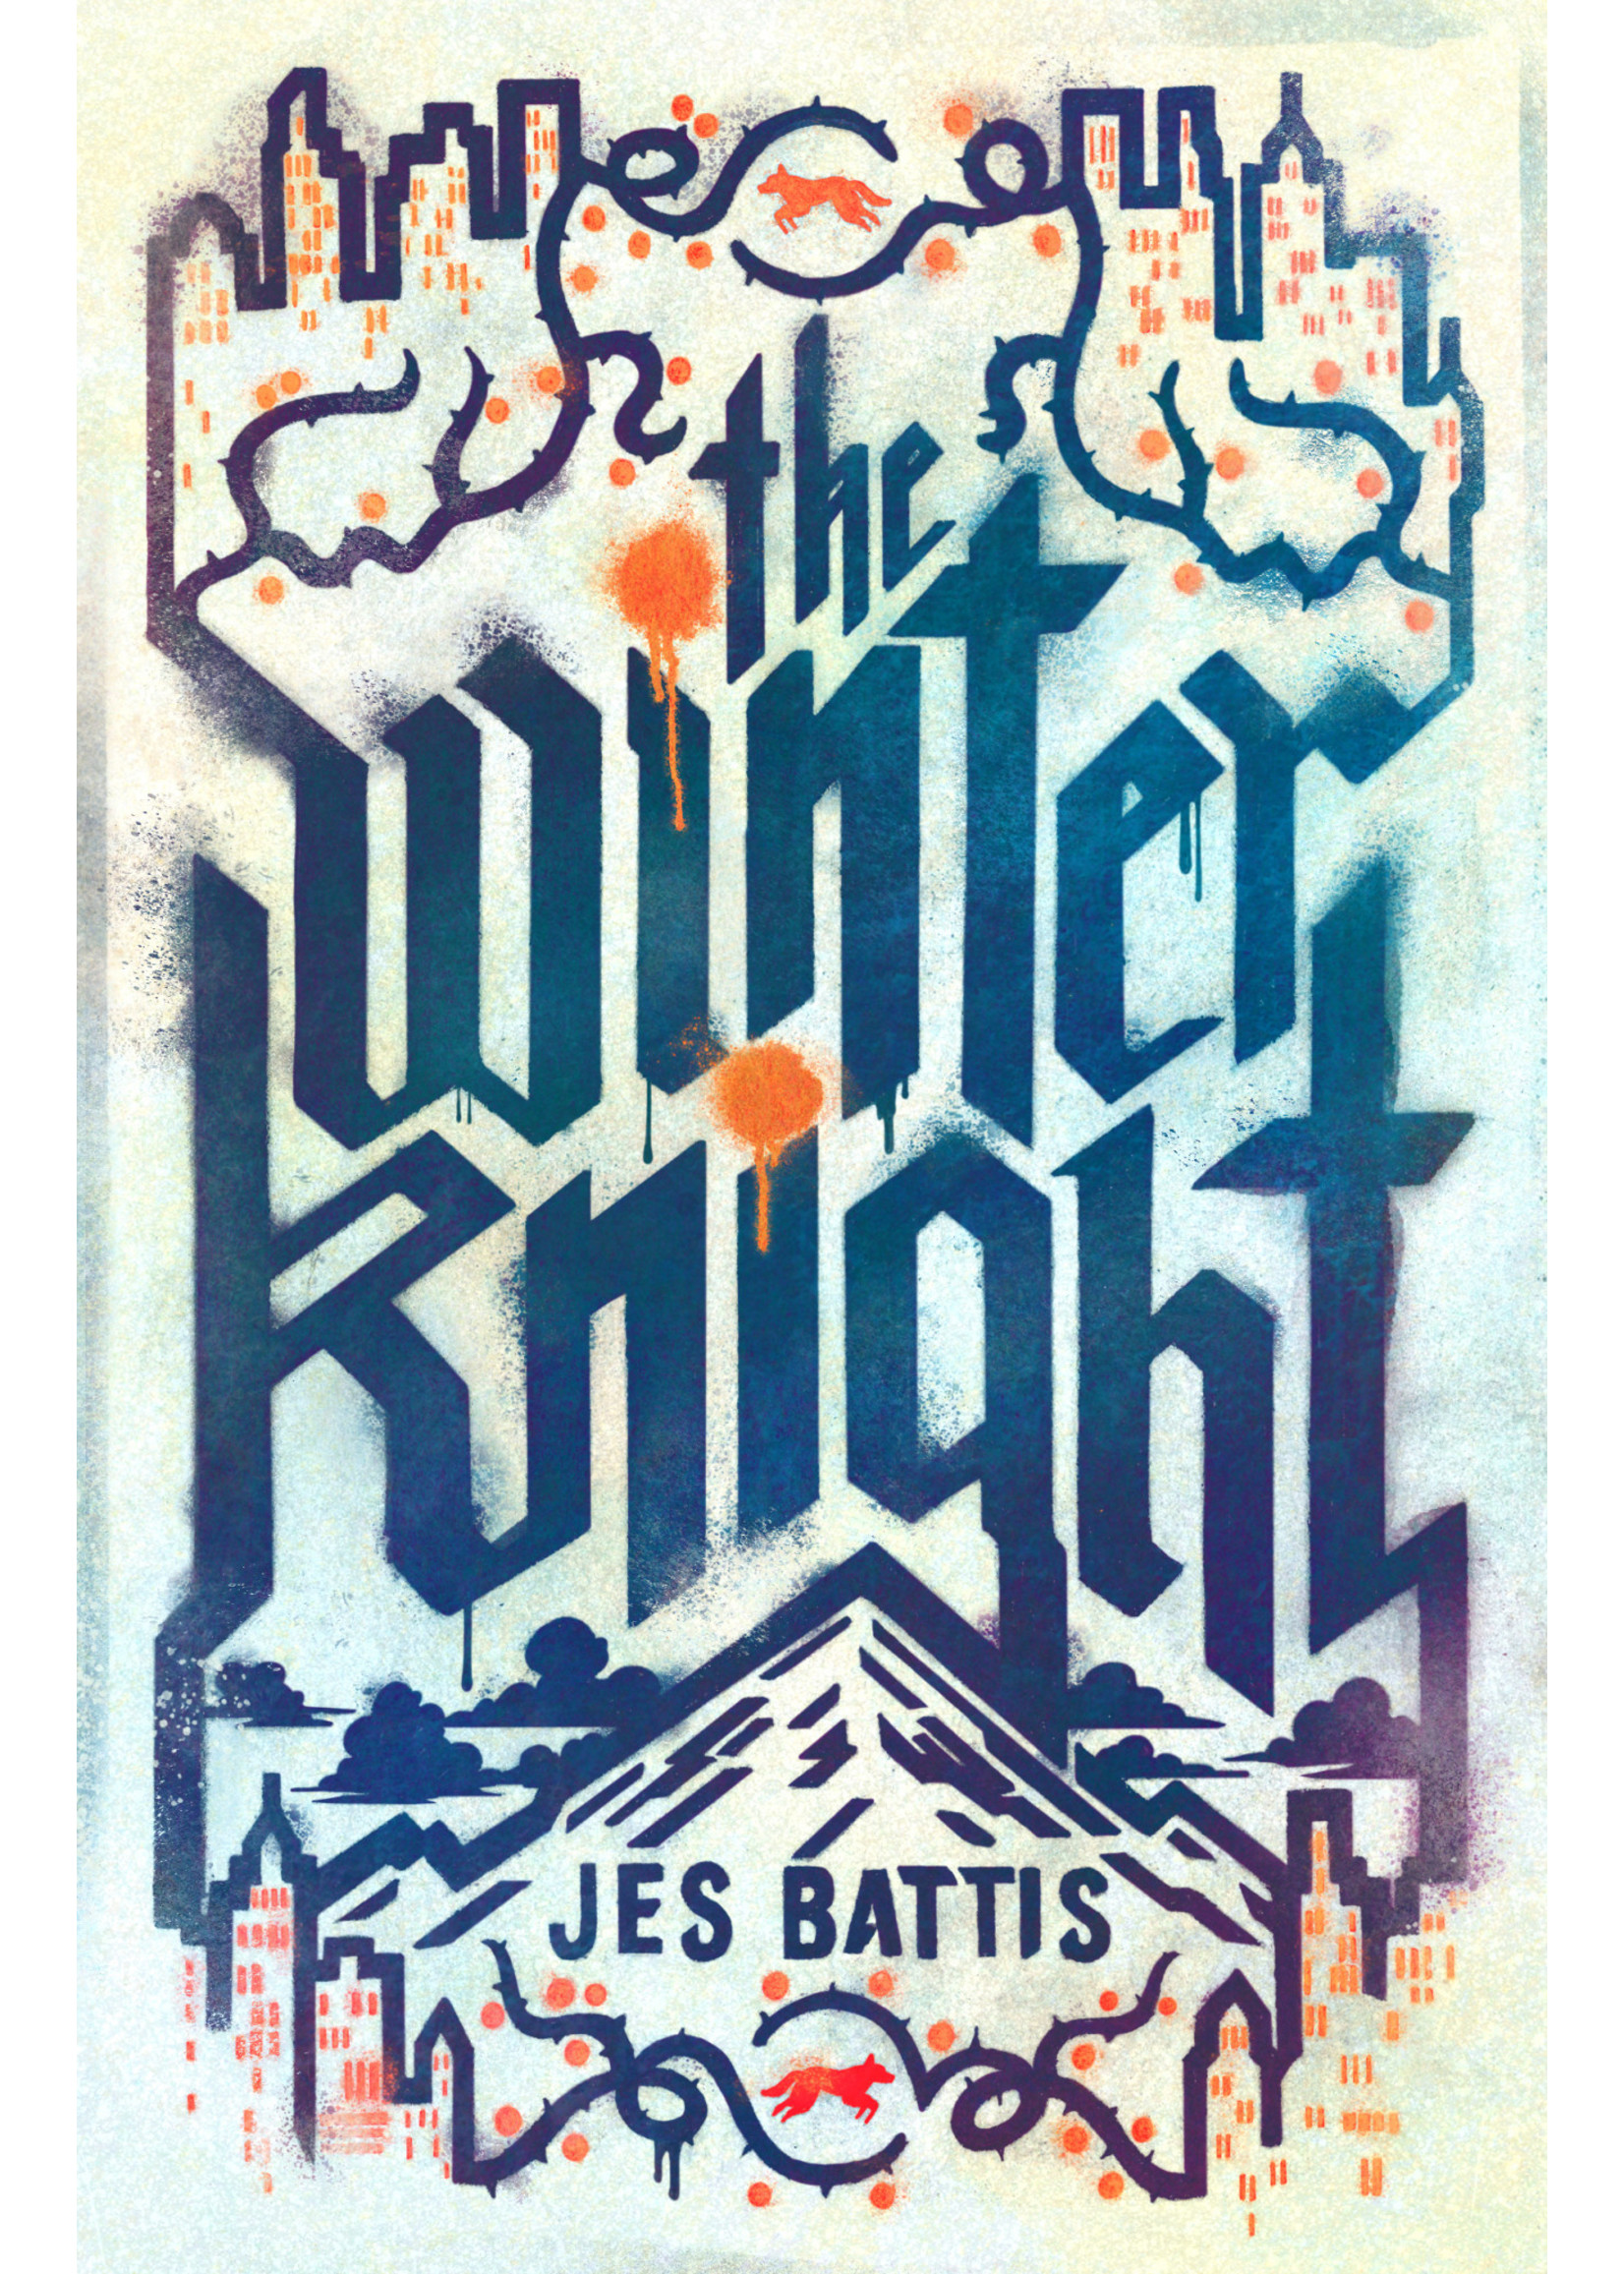 The Winter Knight by Jes Battis